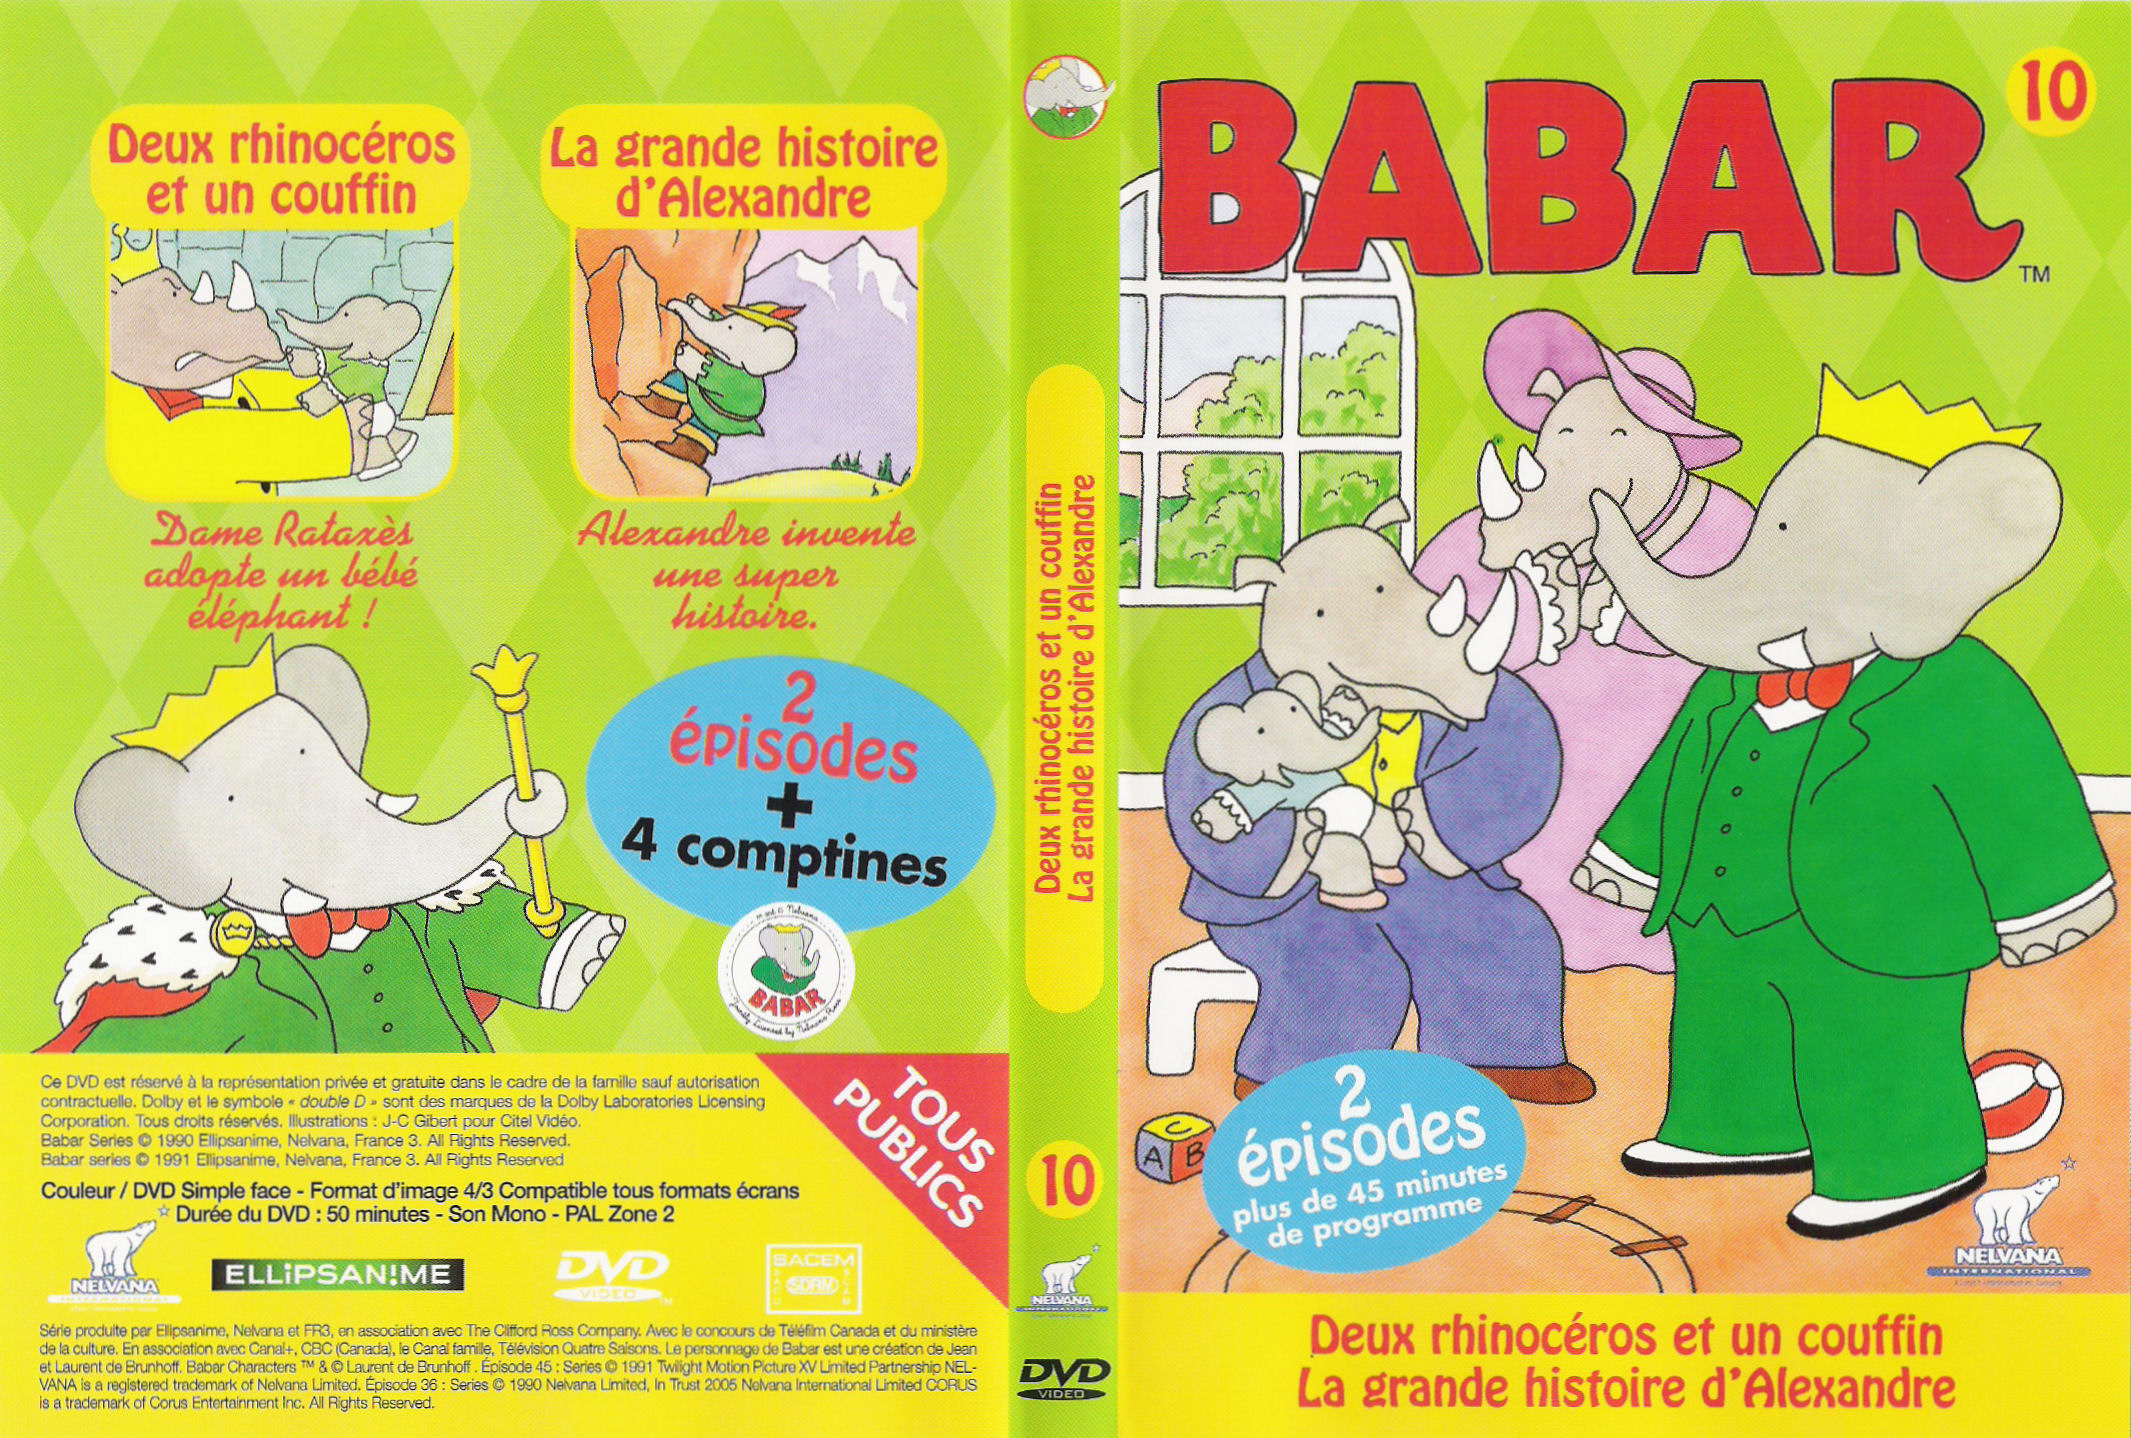 Jaquette DVD Babar vol 10